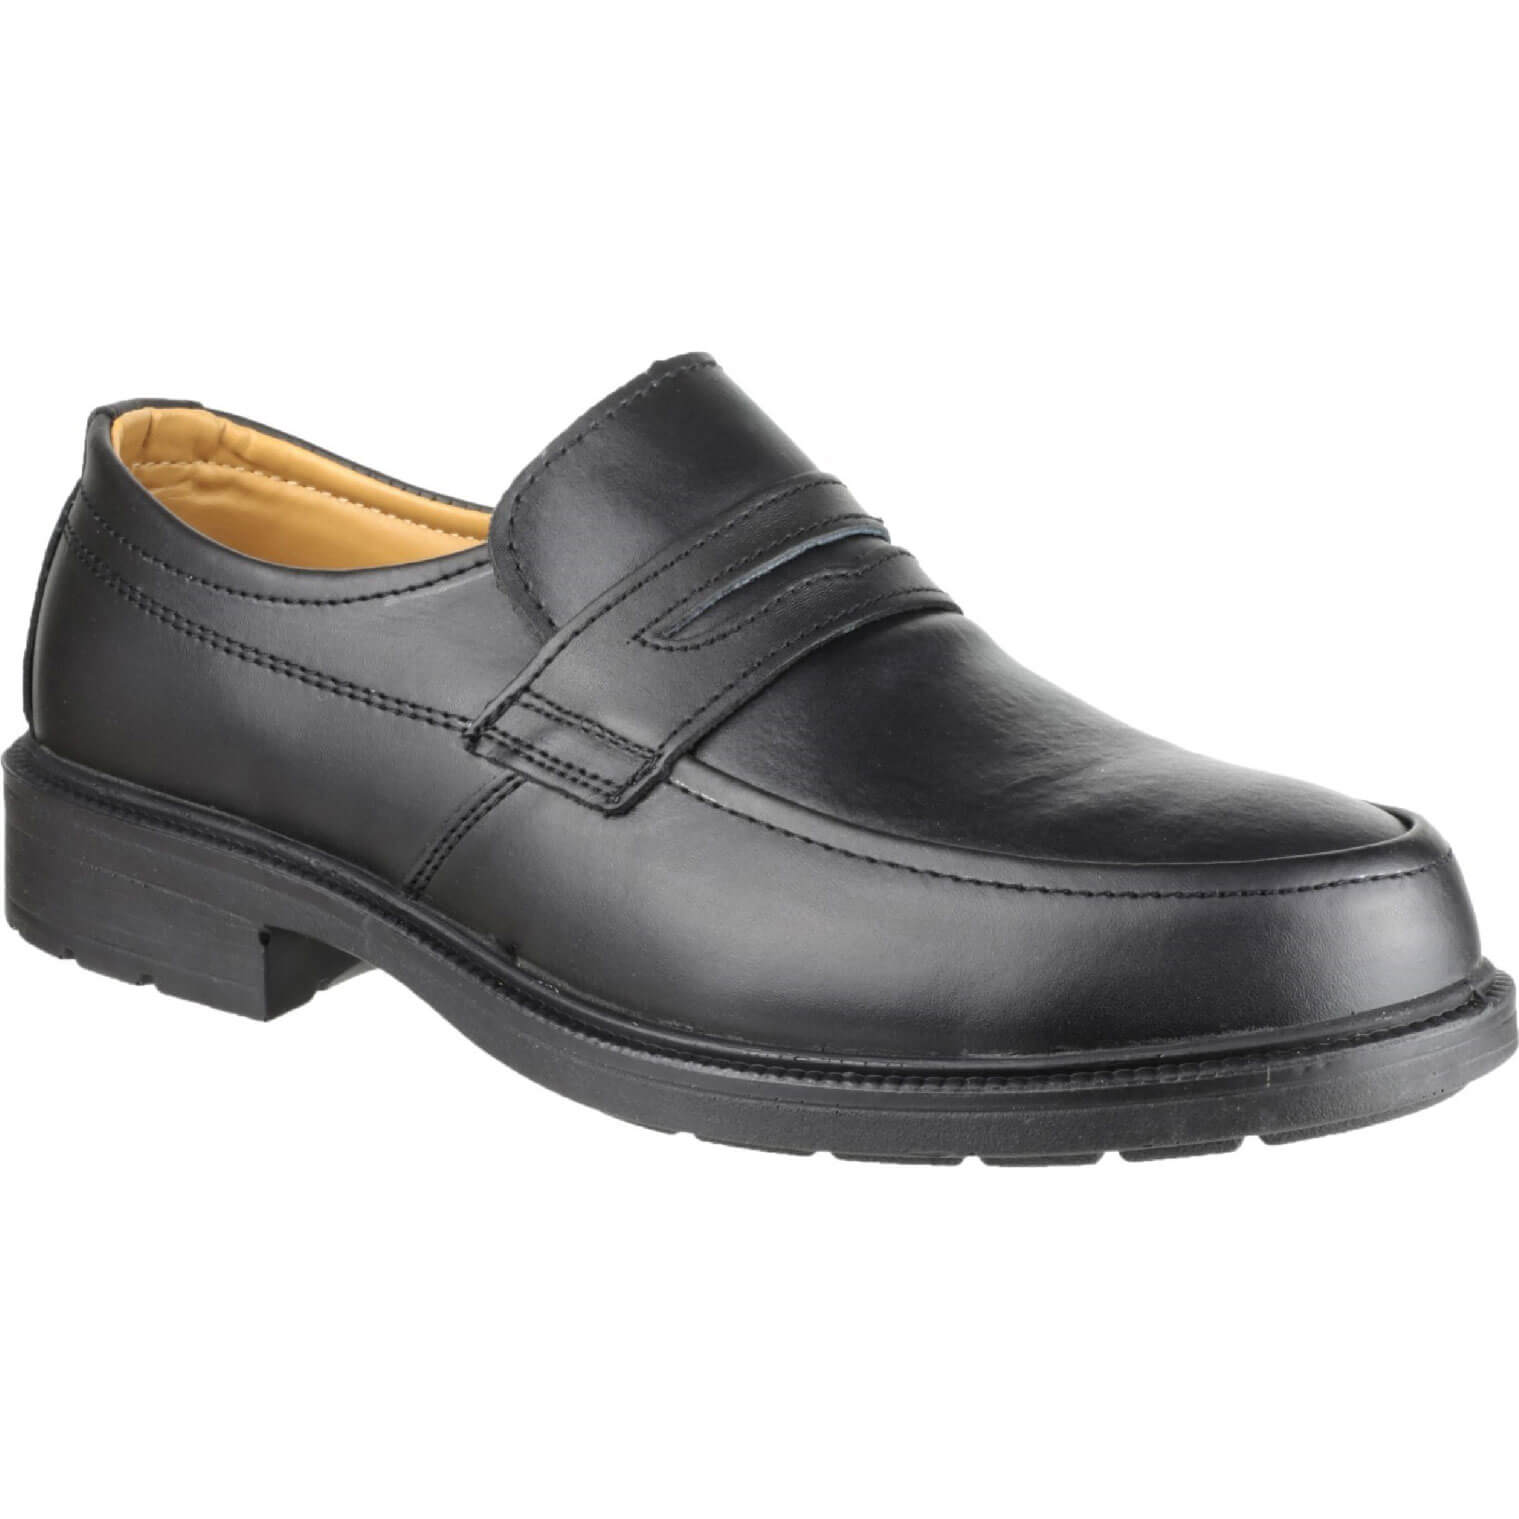 Image of Amblers Safety FS46 Safety Slip On Shoe Black Size 11